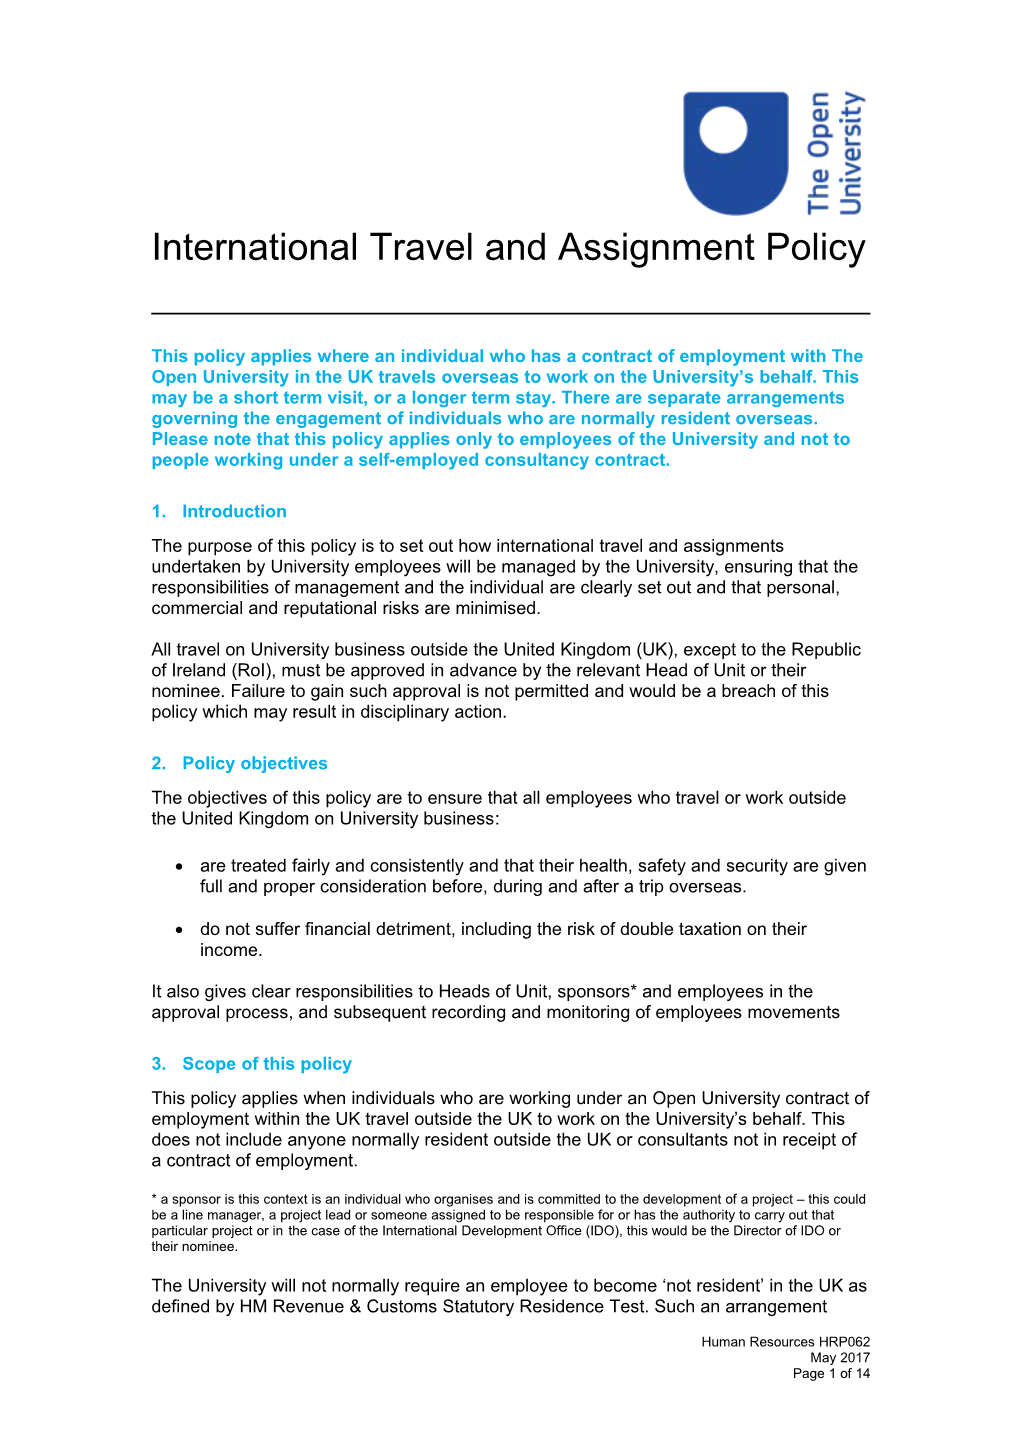 International Travel Policy HRP062